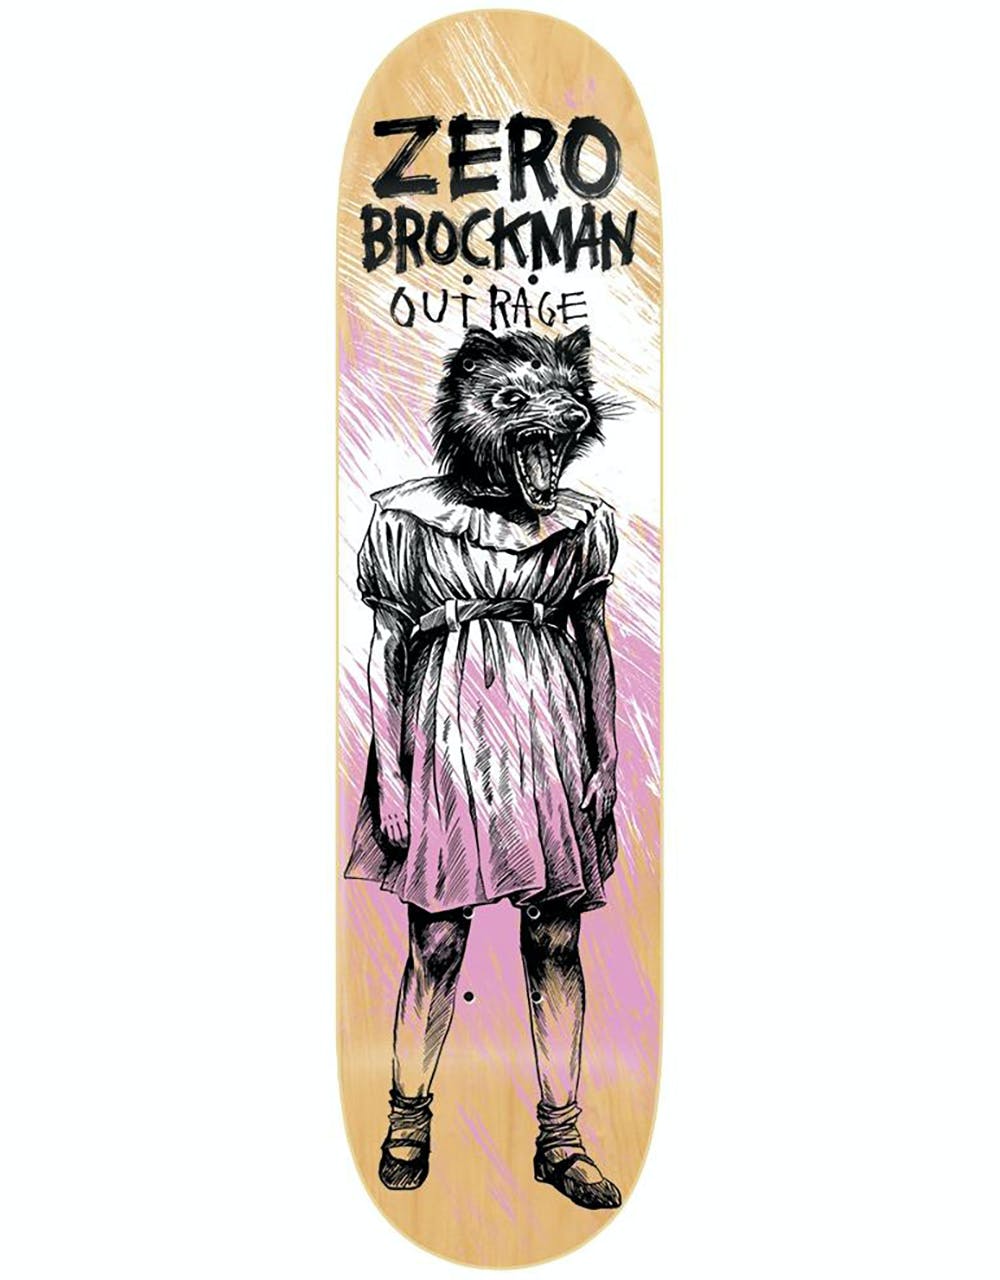 Zero Brockman Outrage Skateboard Deck - 8.25"